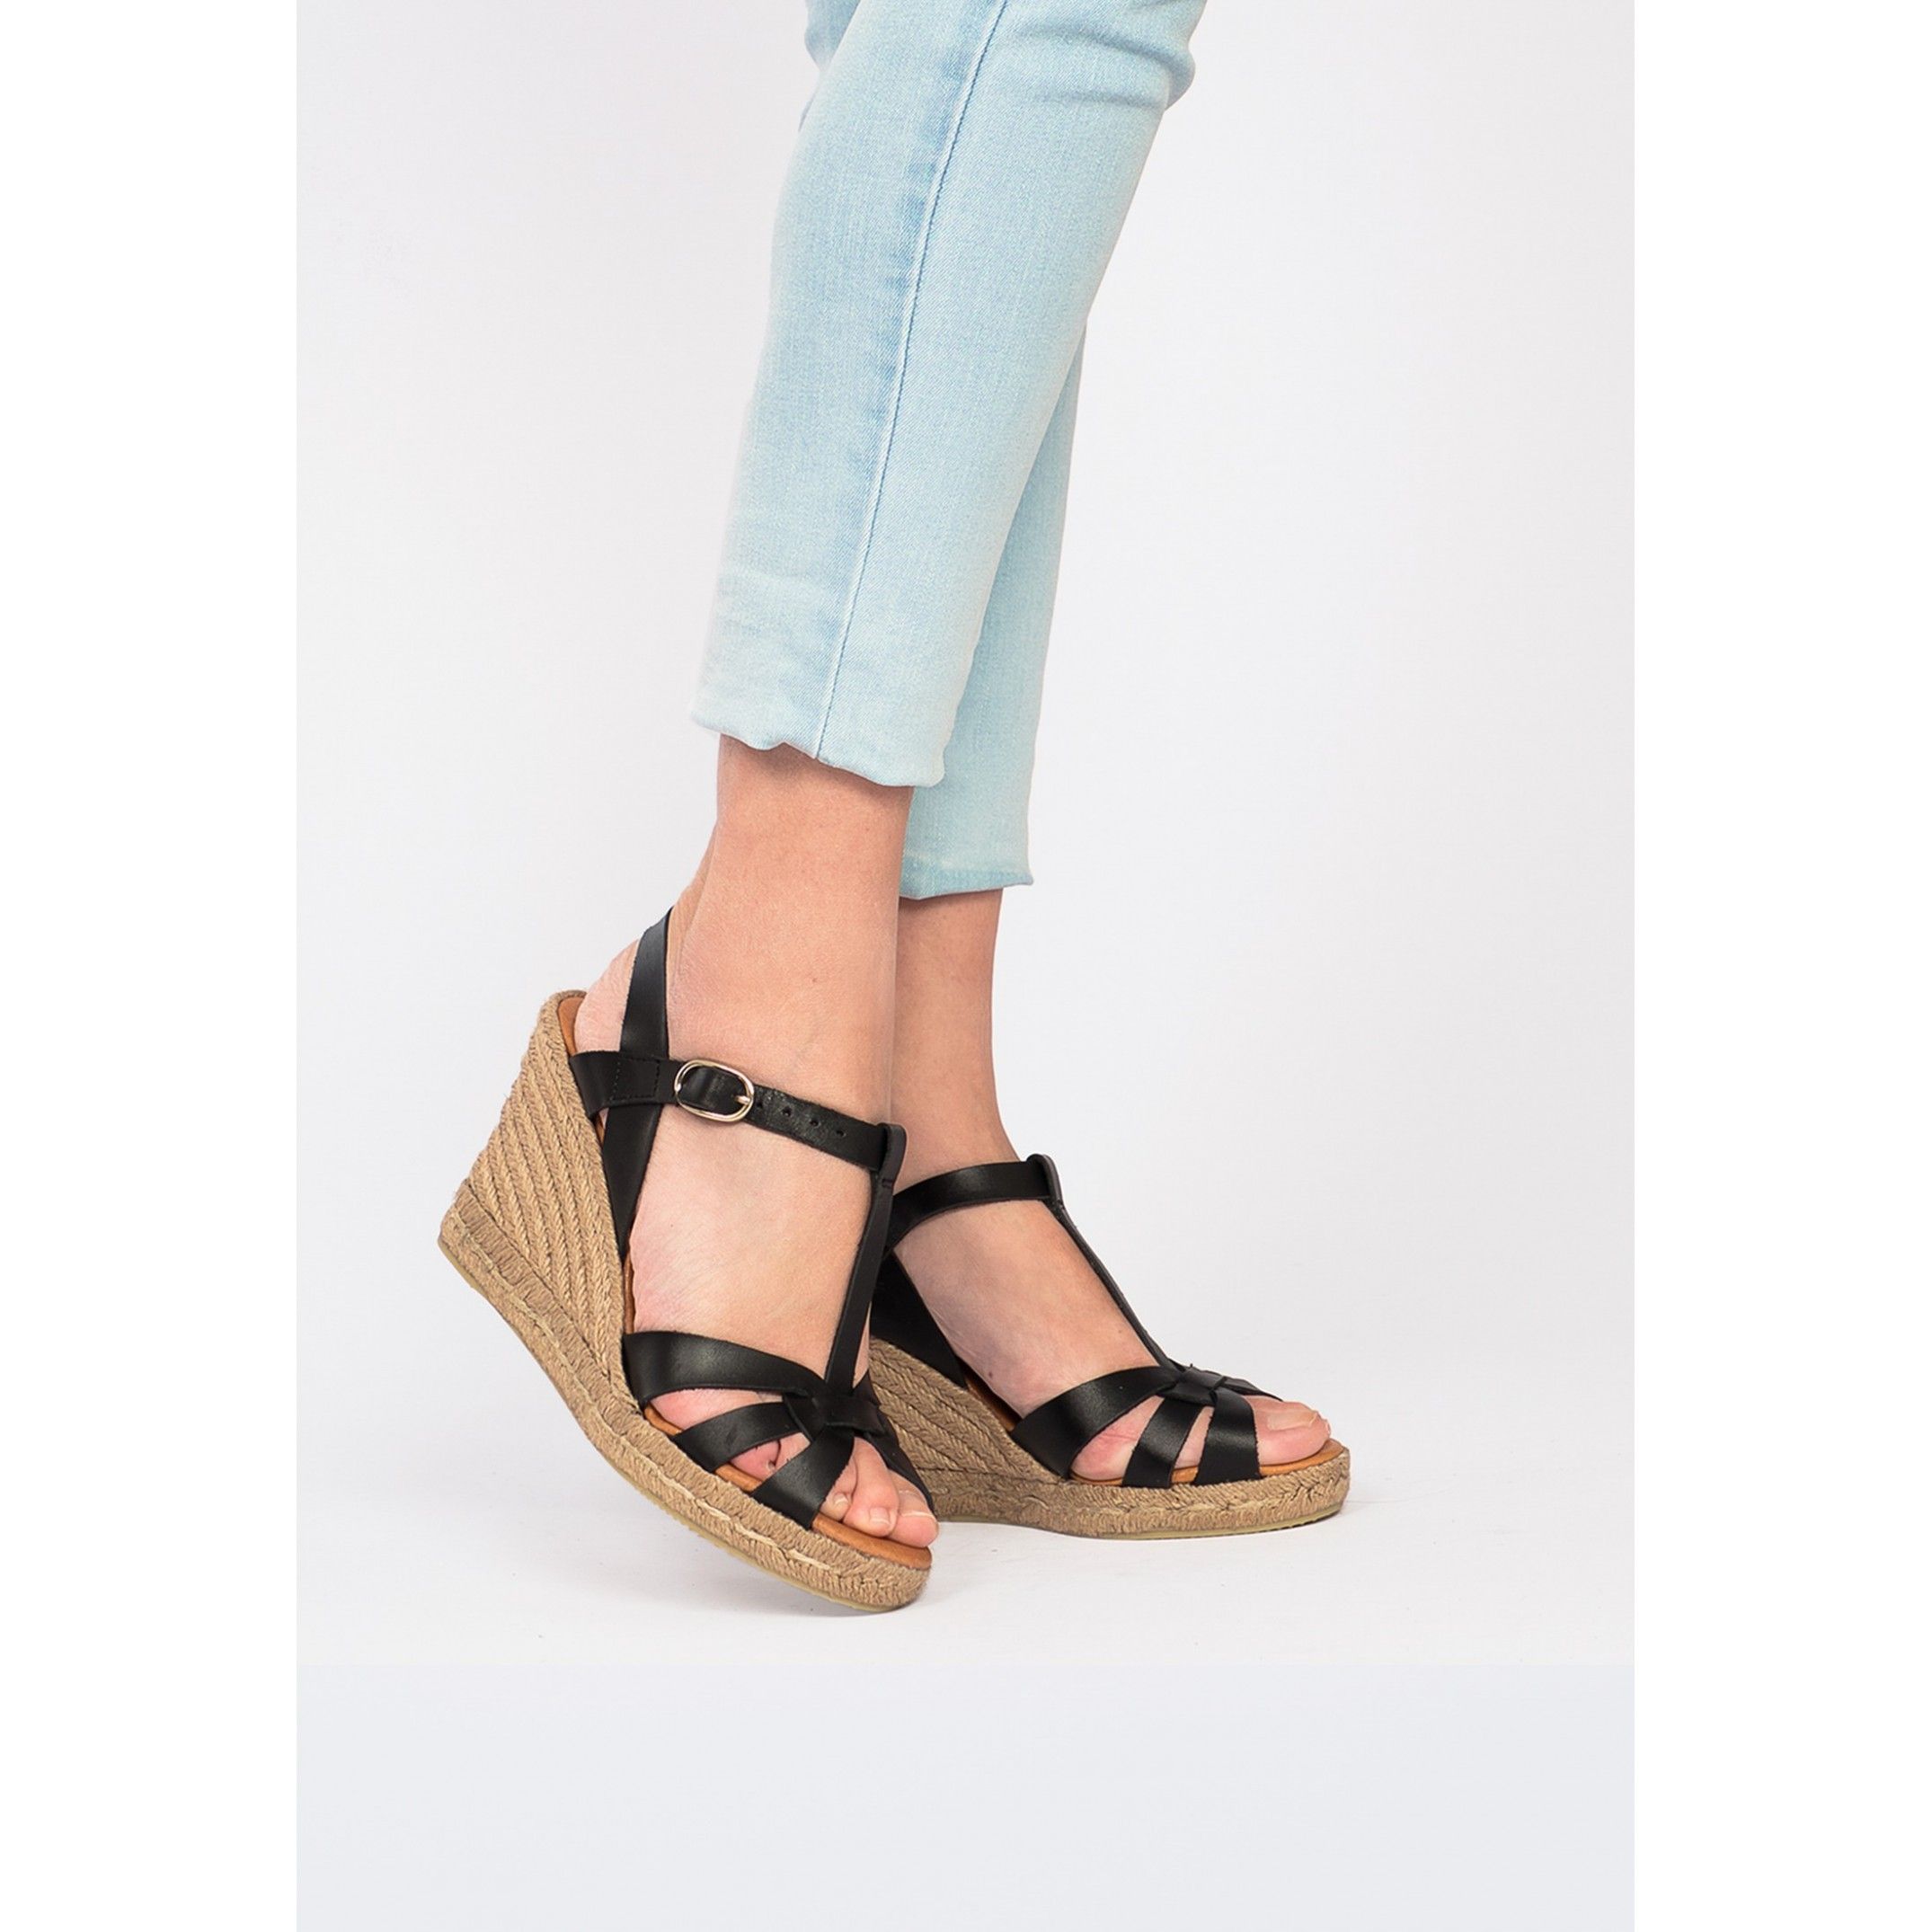 Eva Lopez Ankle Strap Wedge Sandals Women Summer